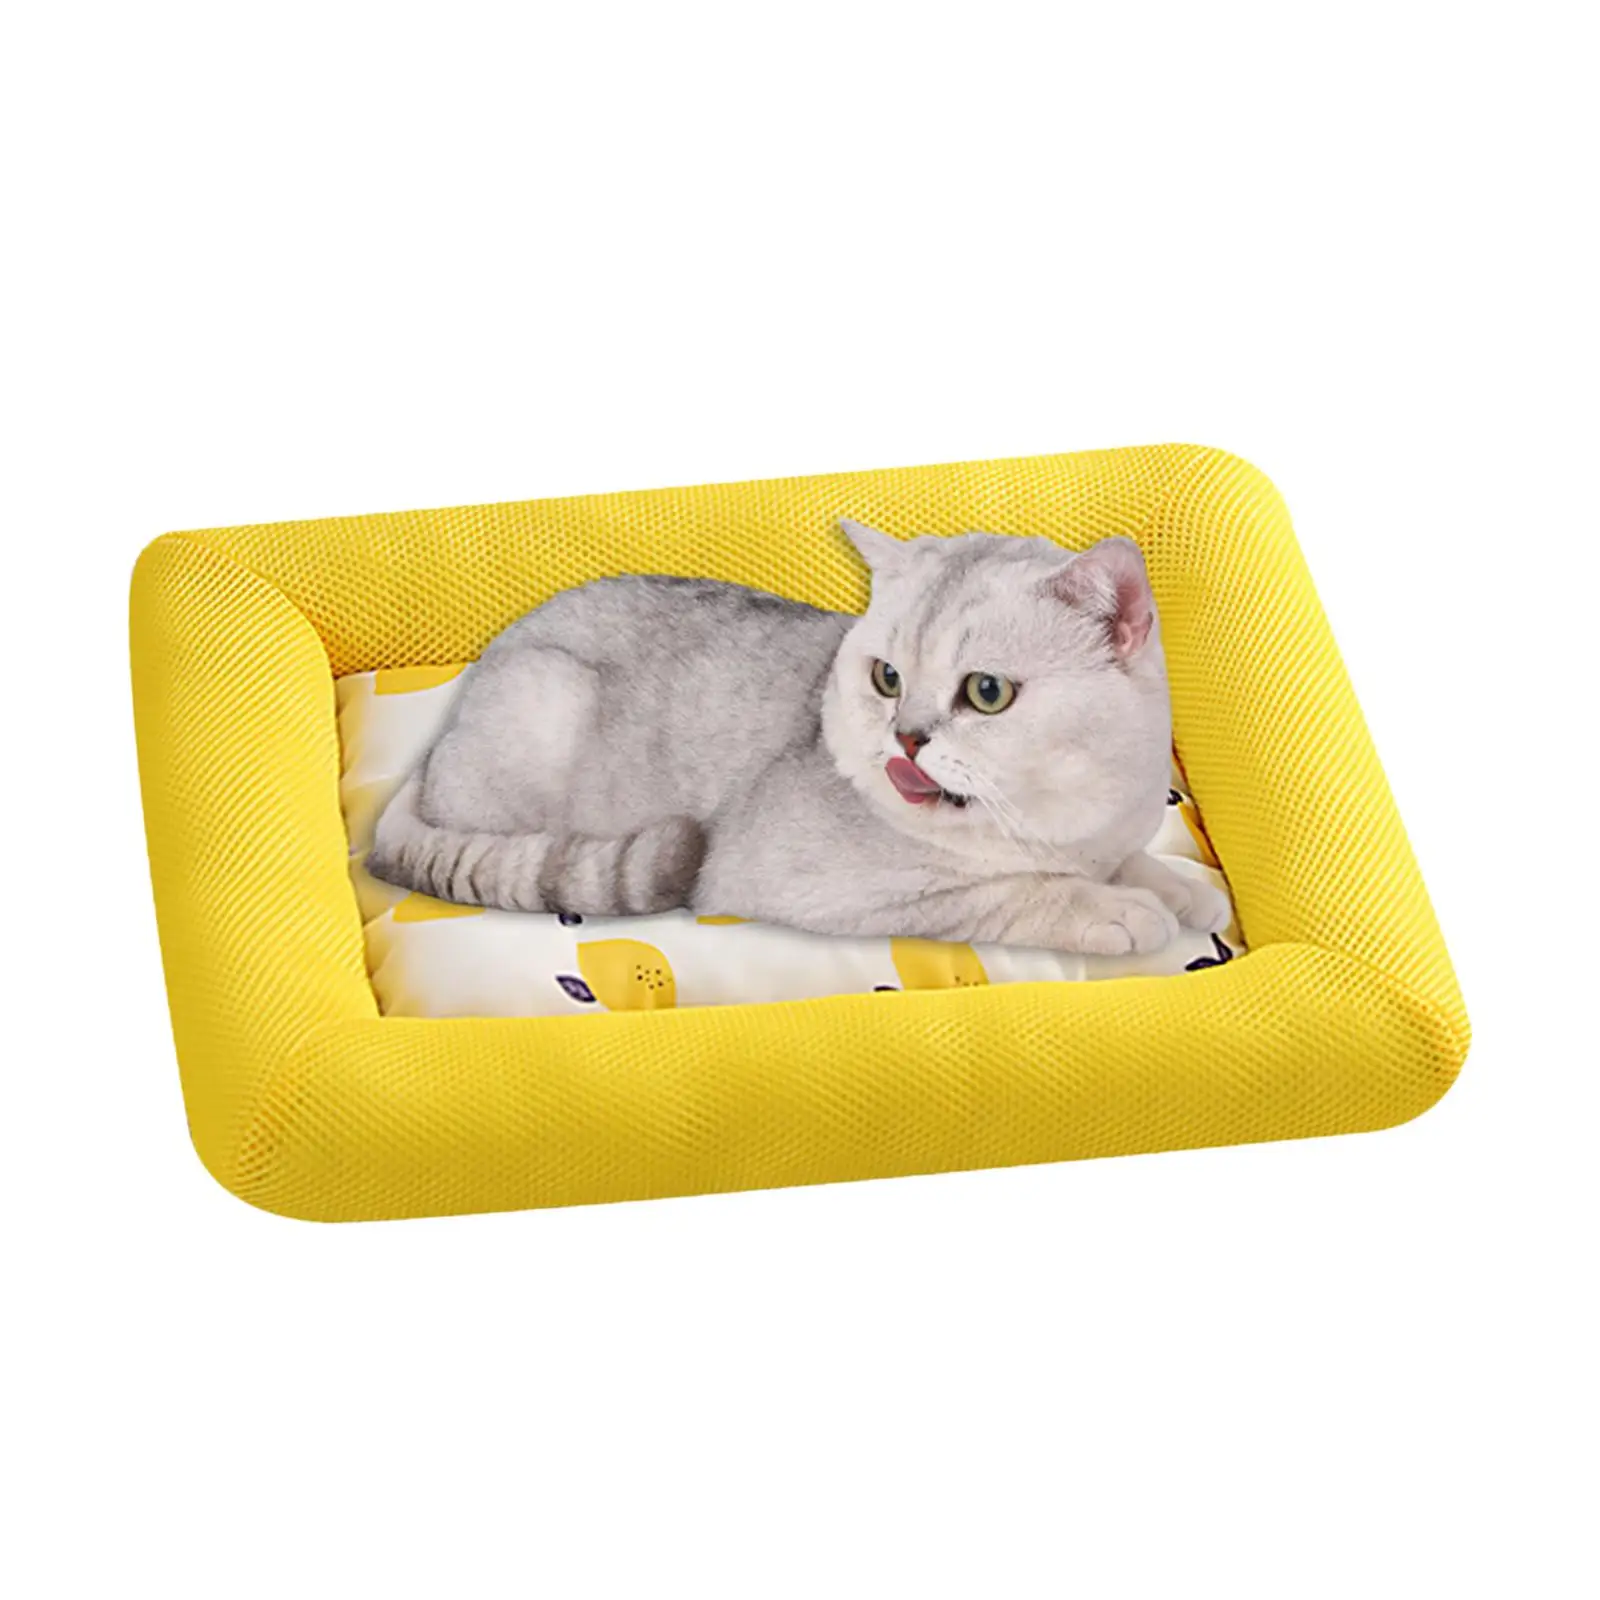 Waterproof Summer Dog Cooling Mat Bed Comfortable Indoor Outdoor Sleeping Pad Sofa Kennel Car Seat Cool Blanket Cushion